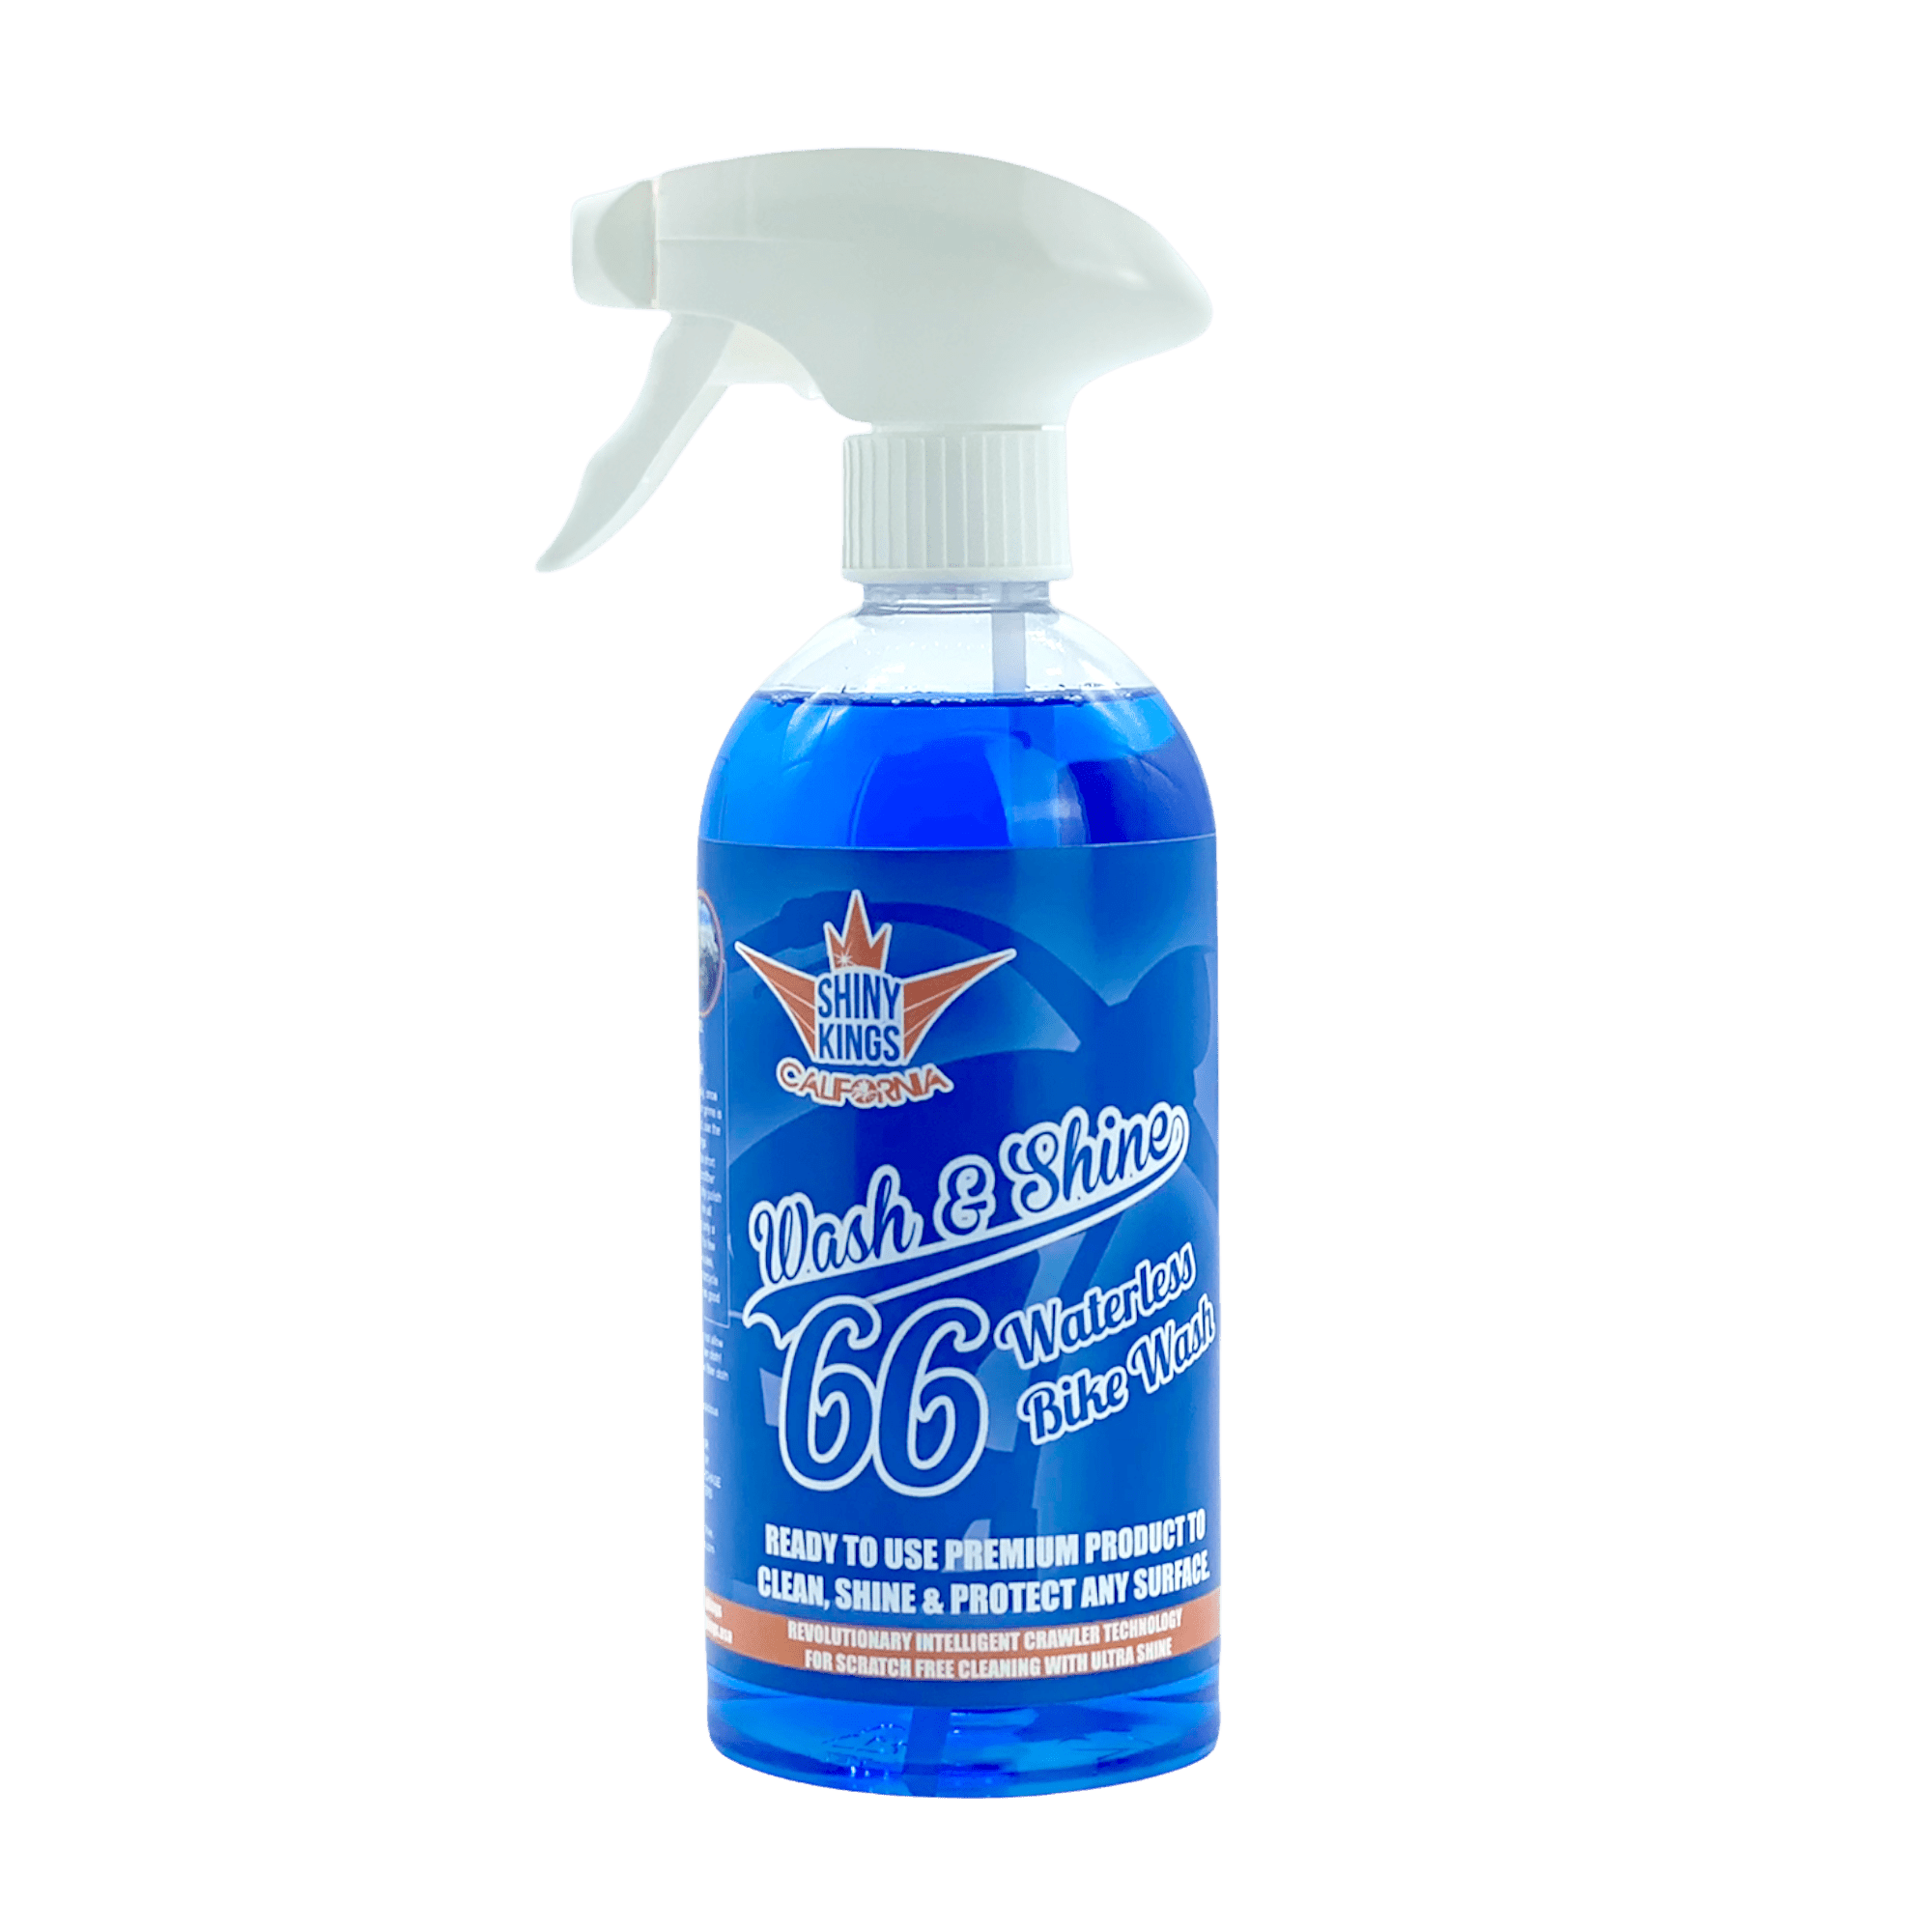 waterless motorcycle cleaner Wash&Shine 66 waterless bike wash 16.9 fl oz